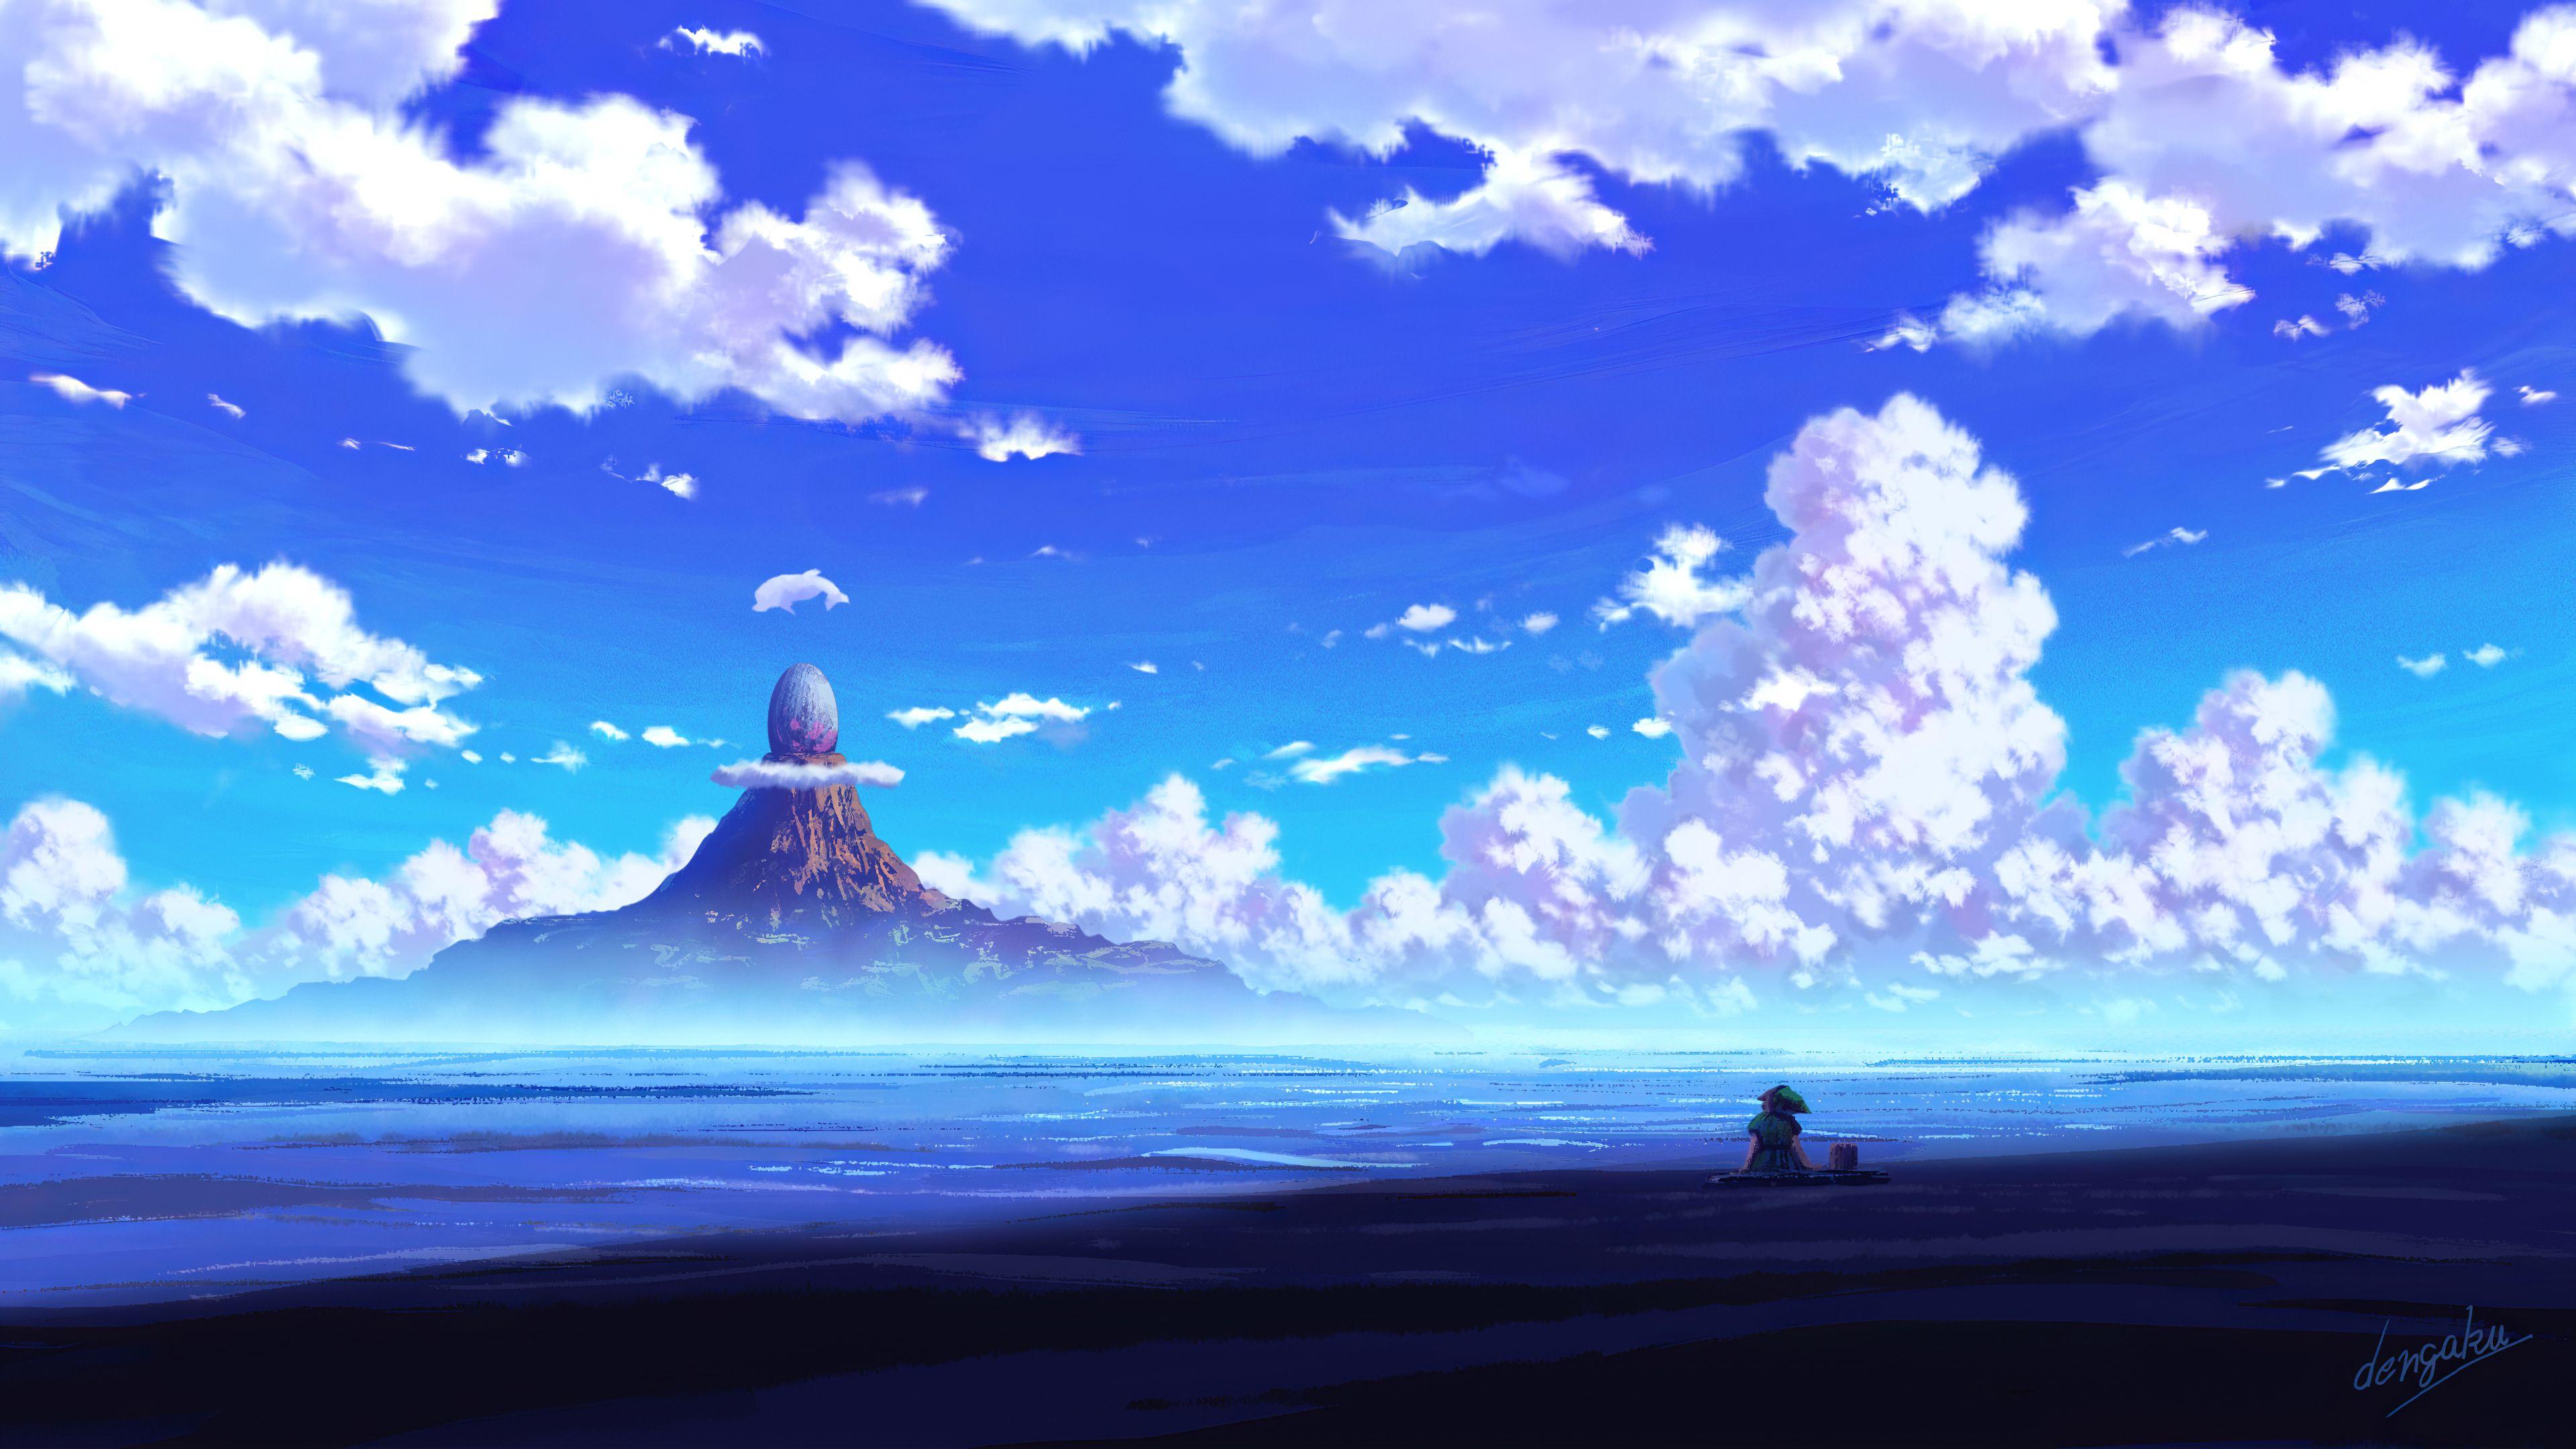 Anime Scenery 4k Wallpapers - Top Free Anime Scenery 4k ...